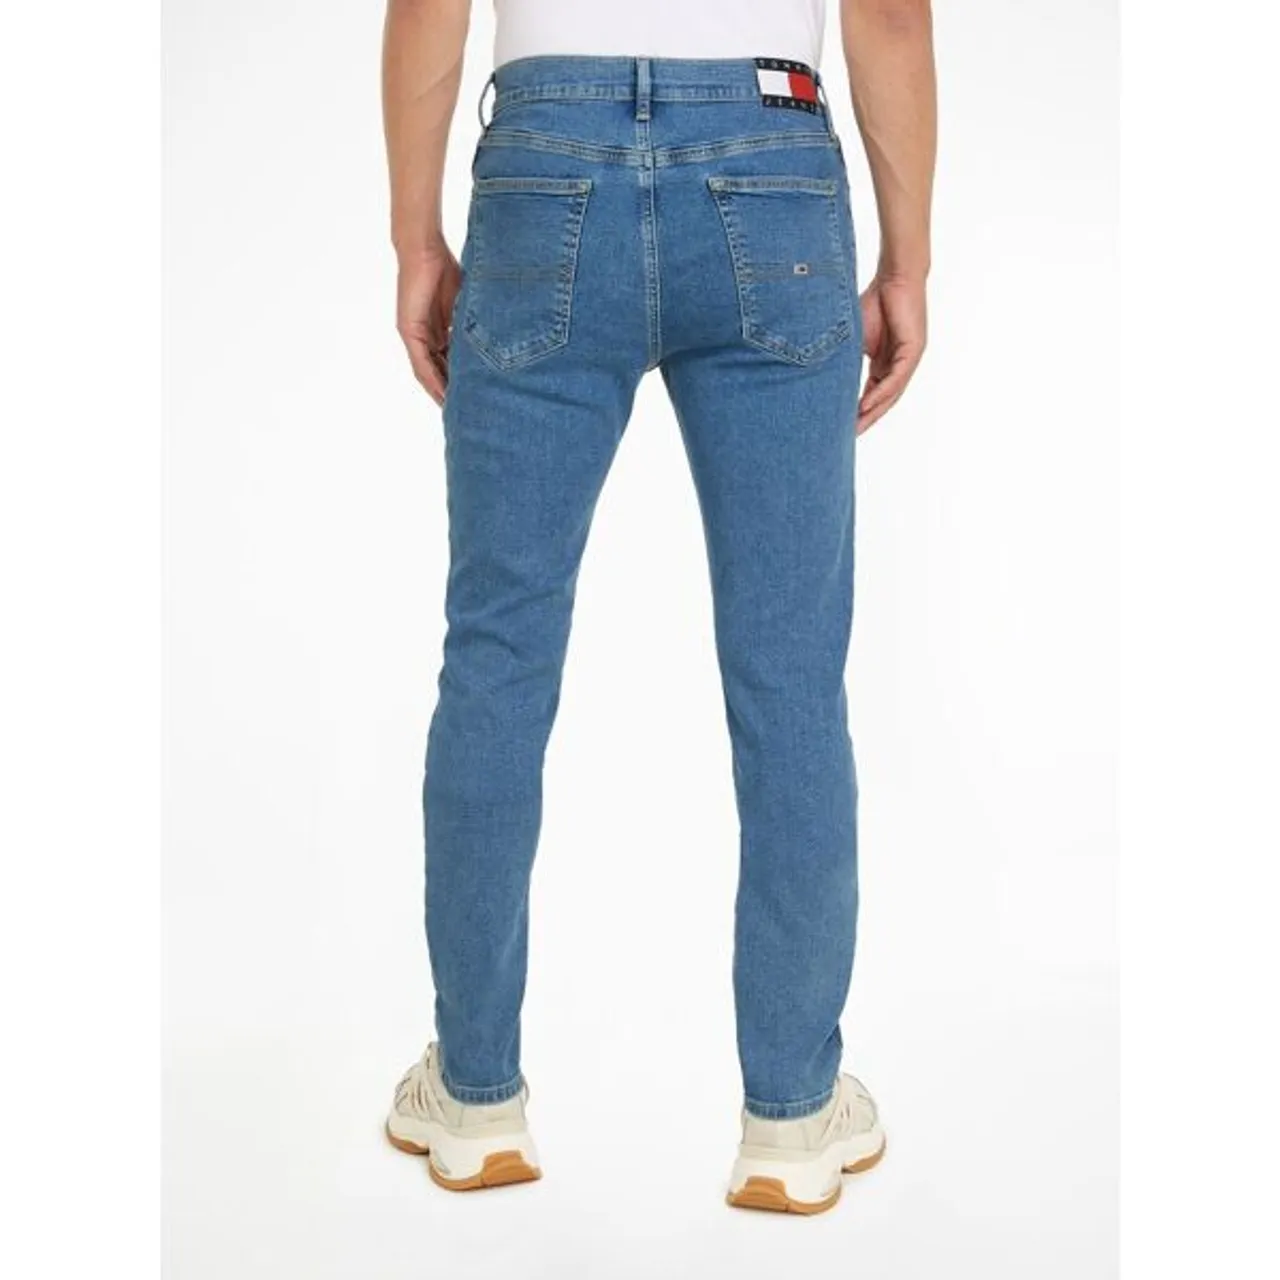 Skinny-fit-Jeans TOMMY JEANS "SIMON SKNY" Gr. 32, Länge 32, blau (mid blue) Herren Jeans Skinny-Jeans im 5-Pocket-Style